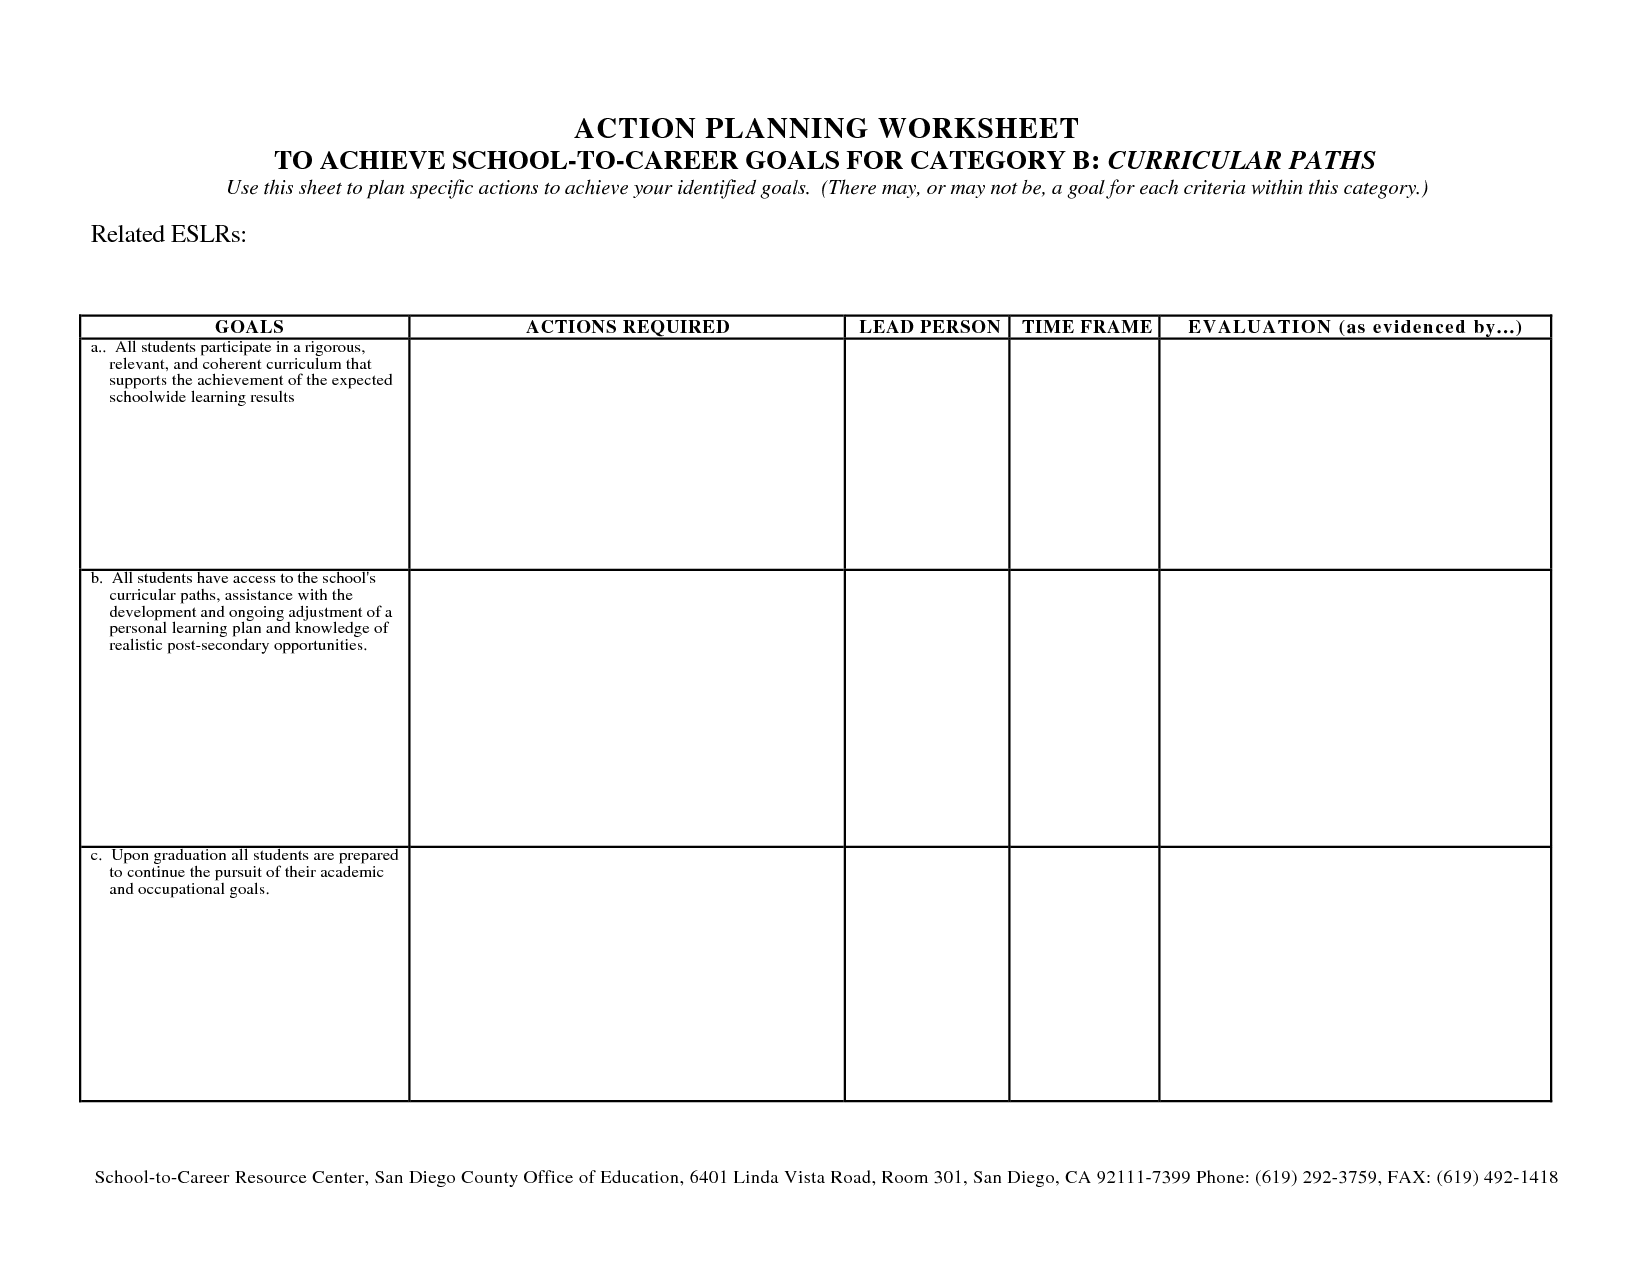 Planning and Goal Action Plan Worksheet Image